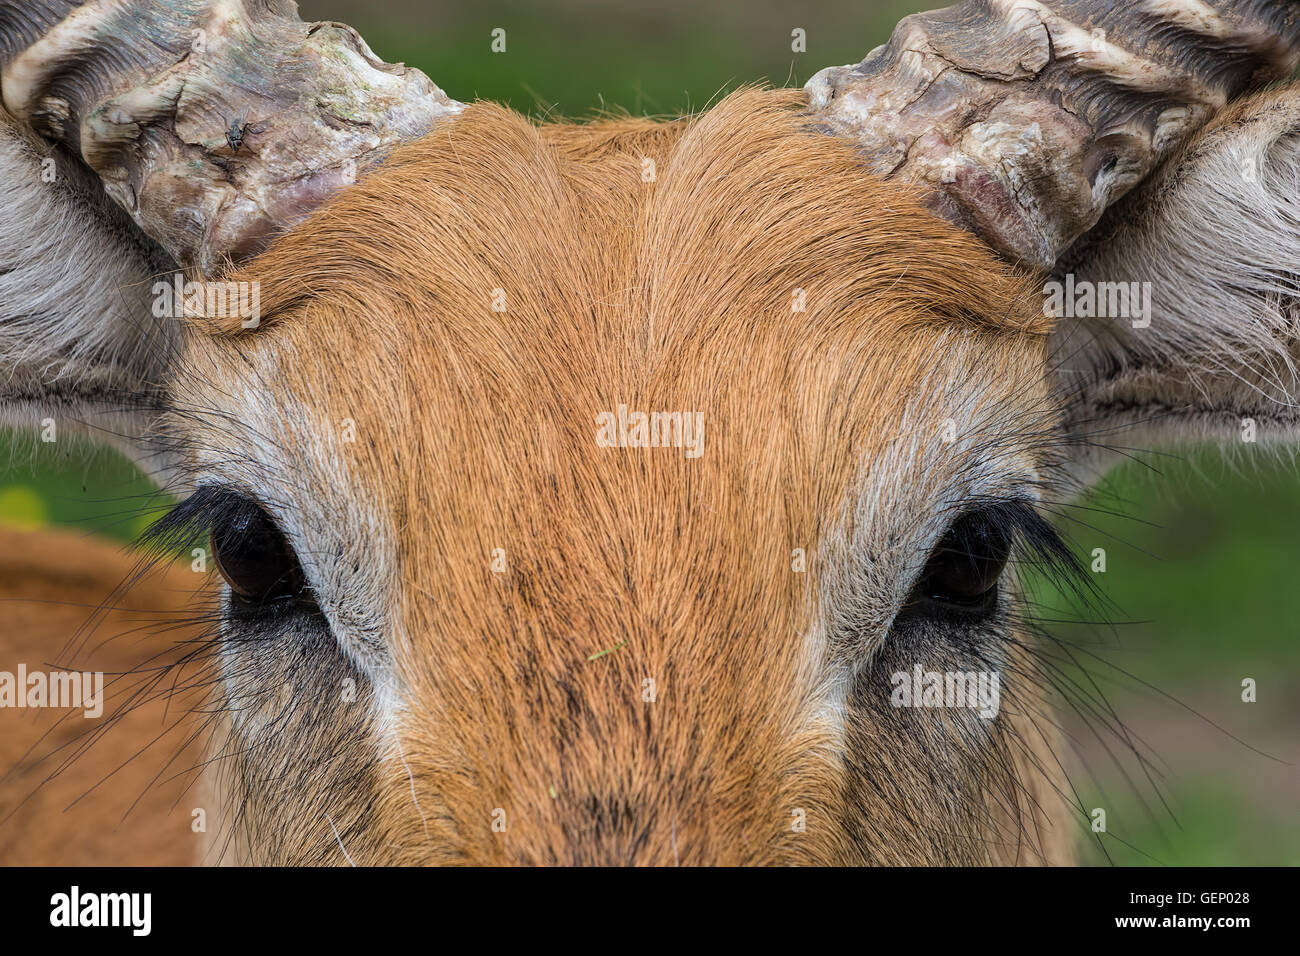 Closeup retrato de Kafue Lechve, hermosos animales astados, mamífero rumiante, mirando. Foto de stock